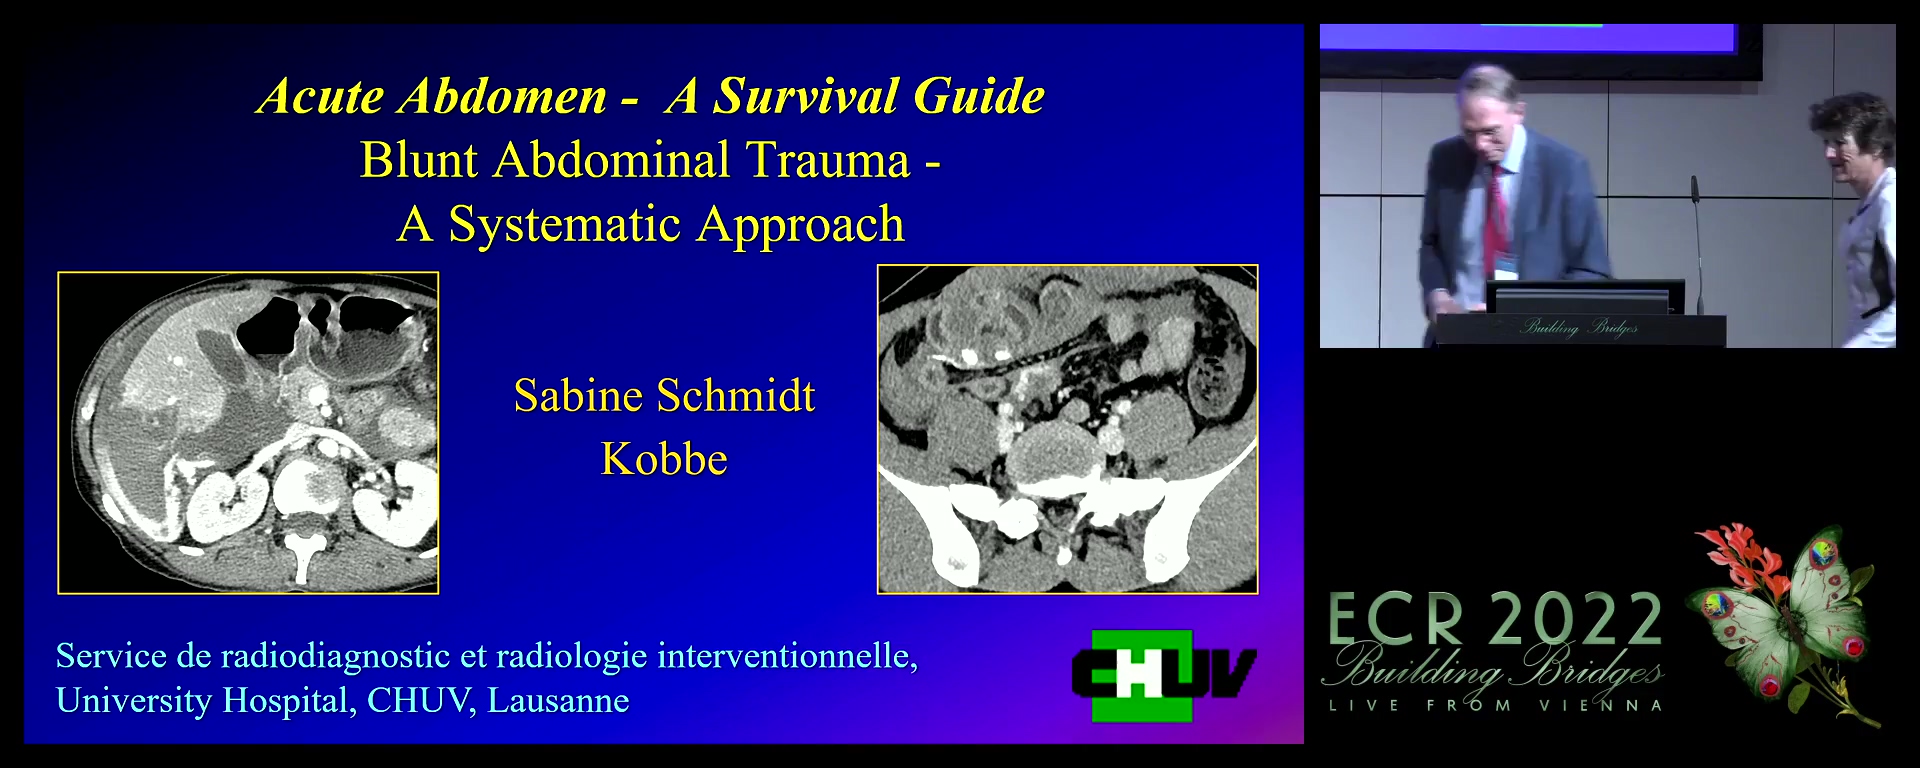 Blunt abdominal trauma: a systematic approach - Sabine Schmidt Kobbe, Lausanne / CH